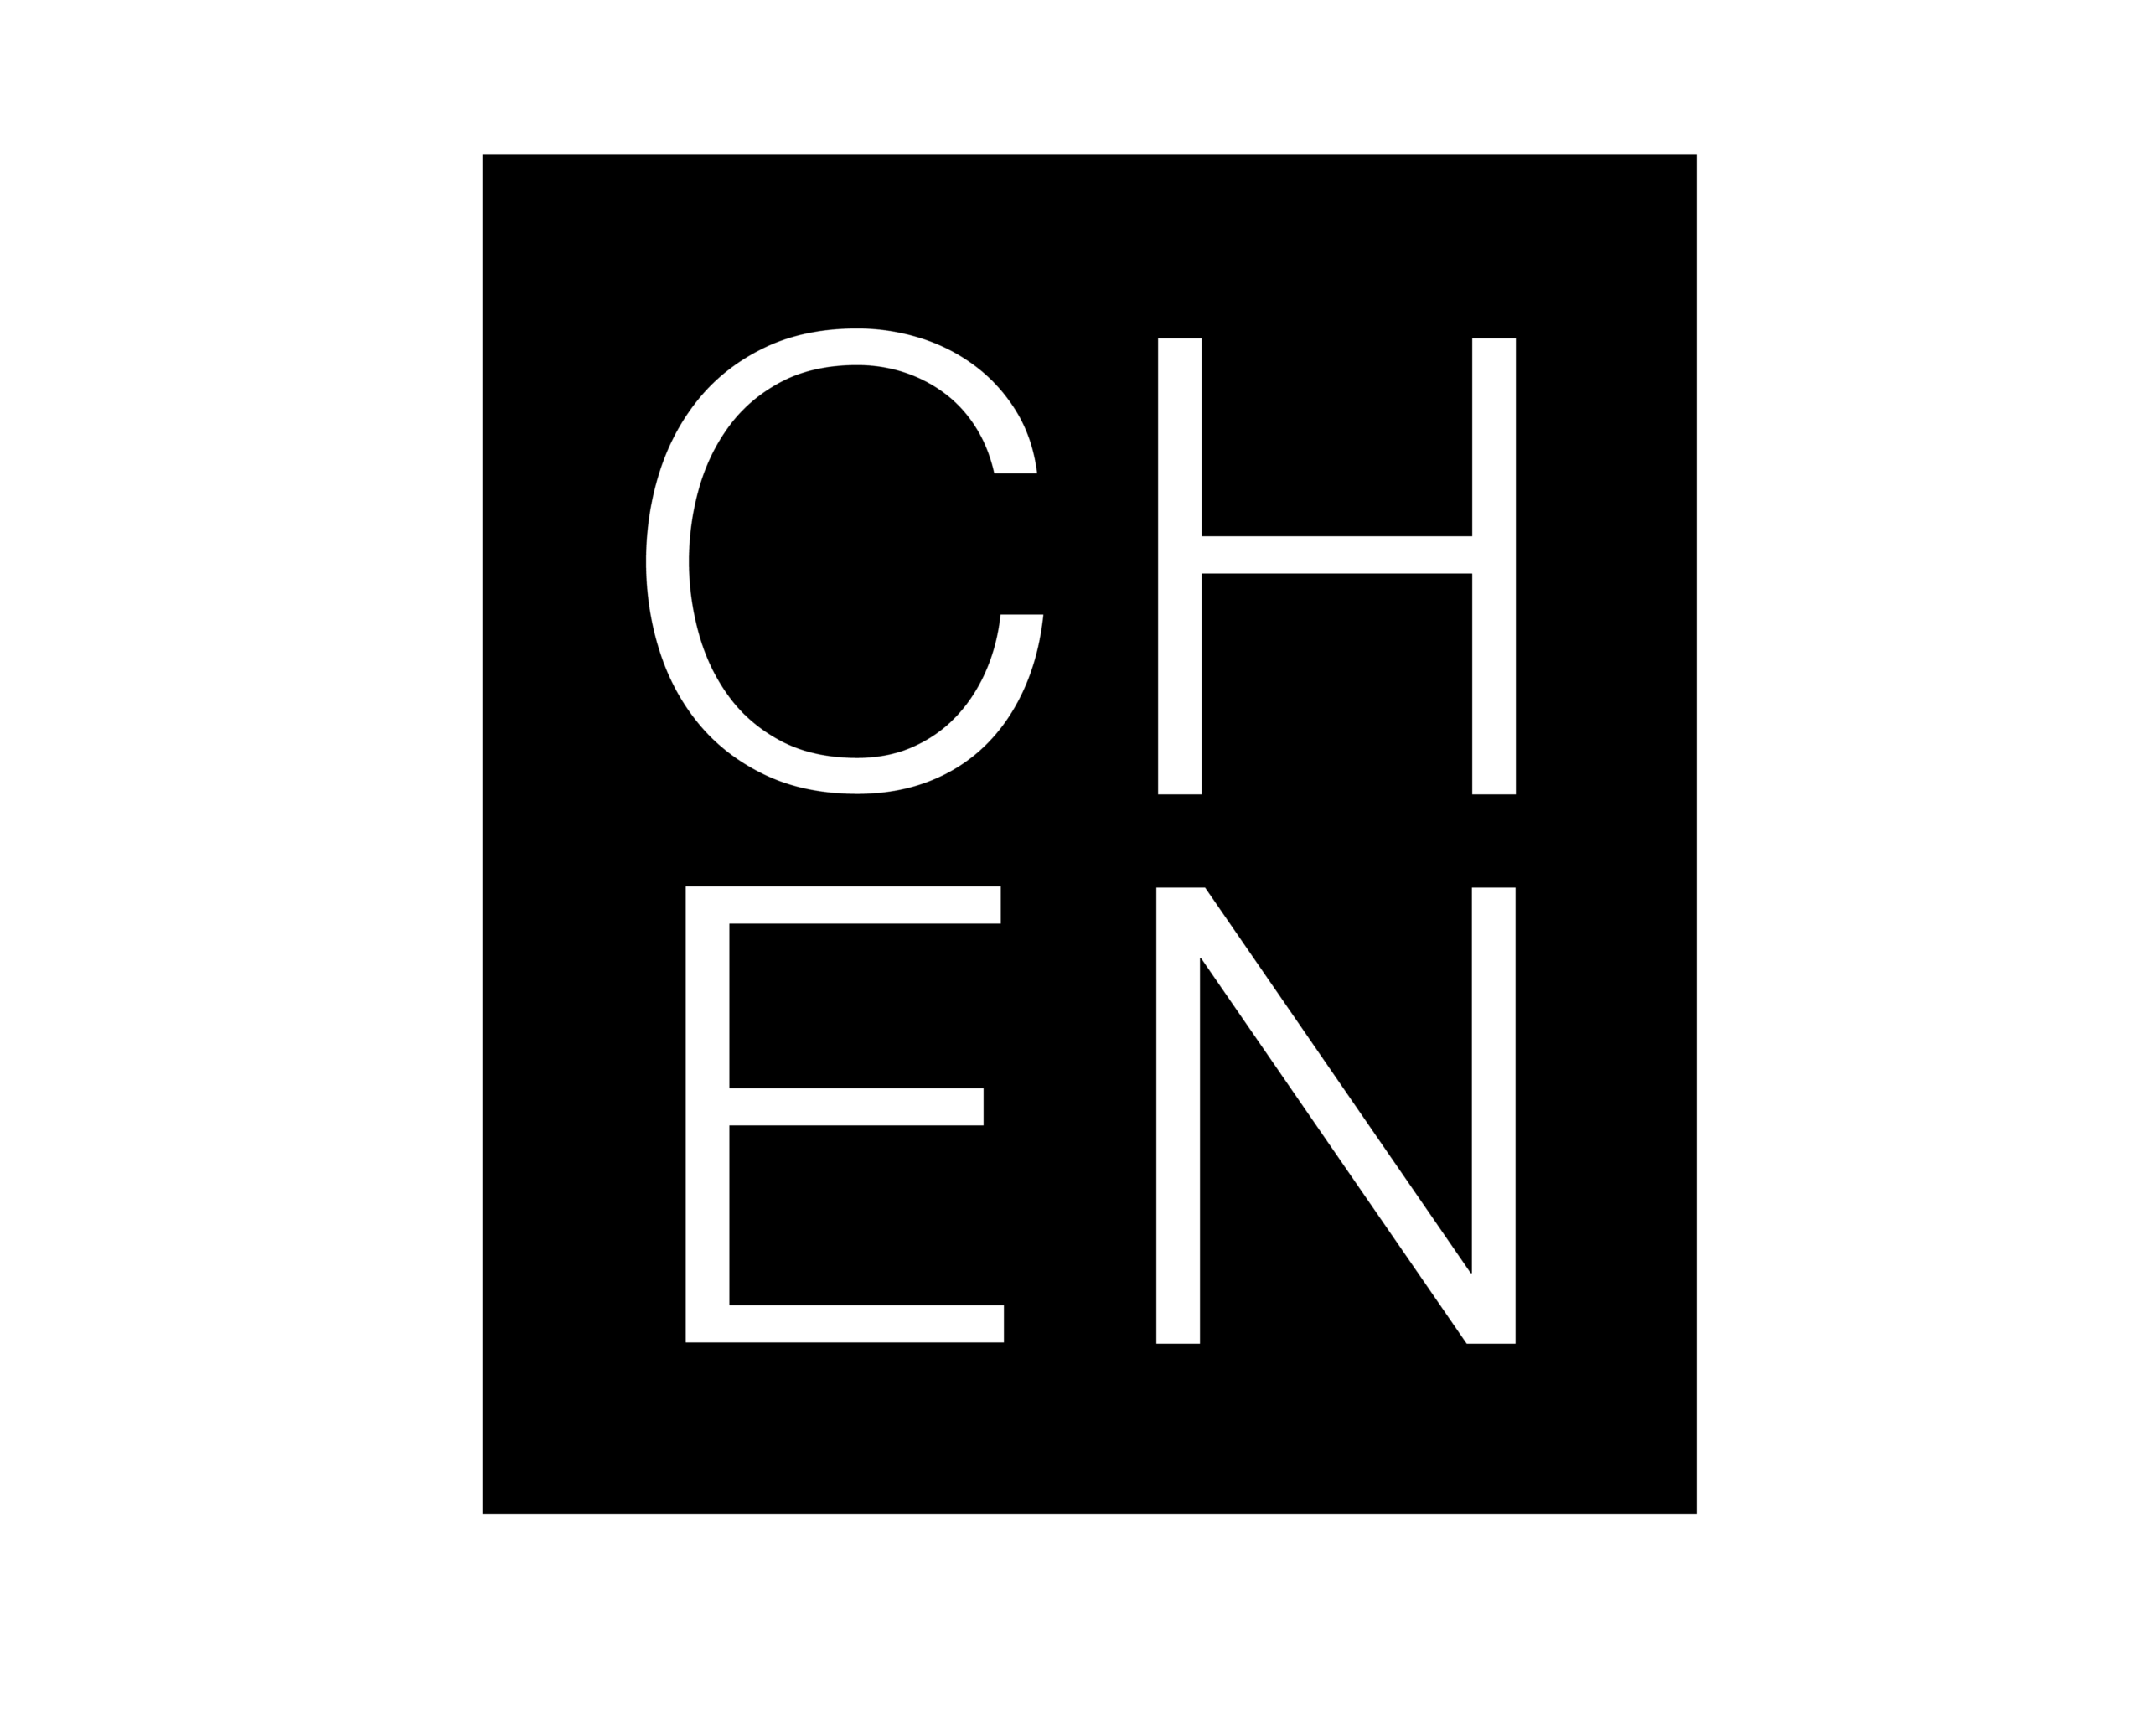 Chen-Long Chung